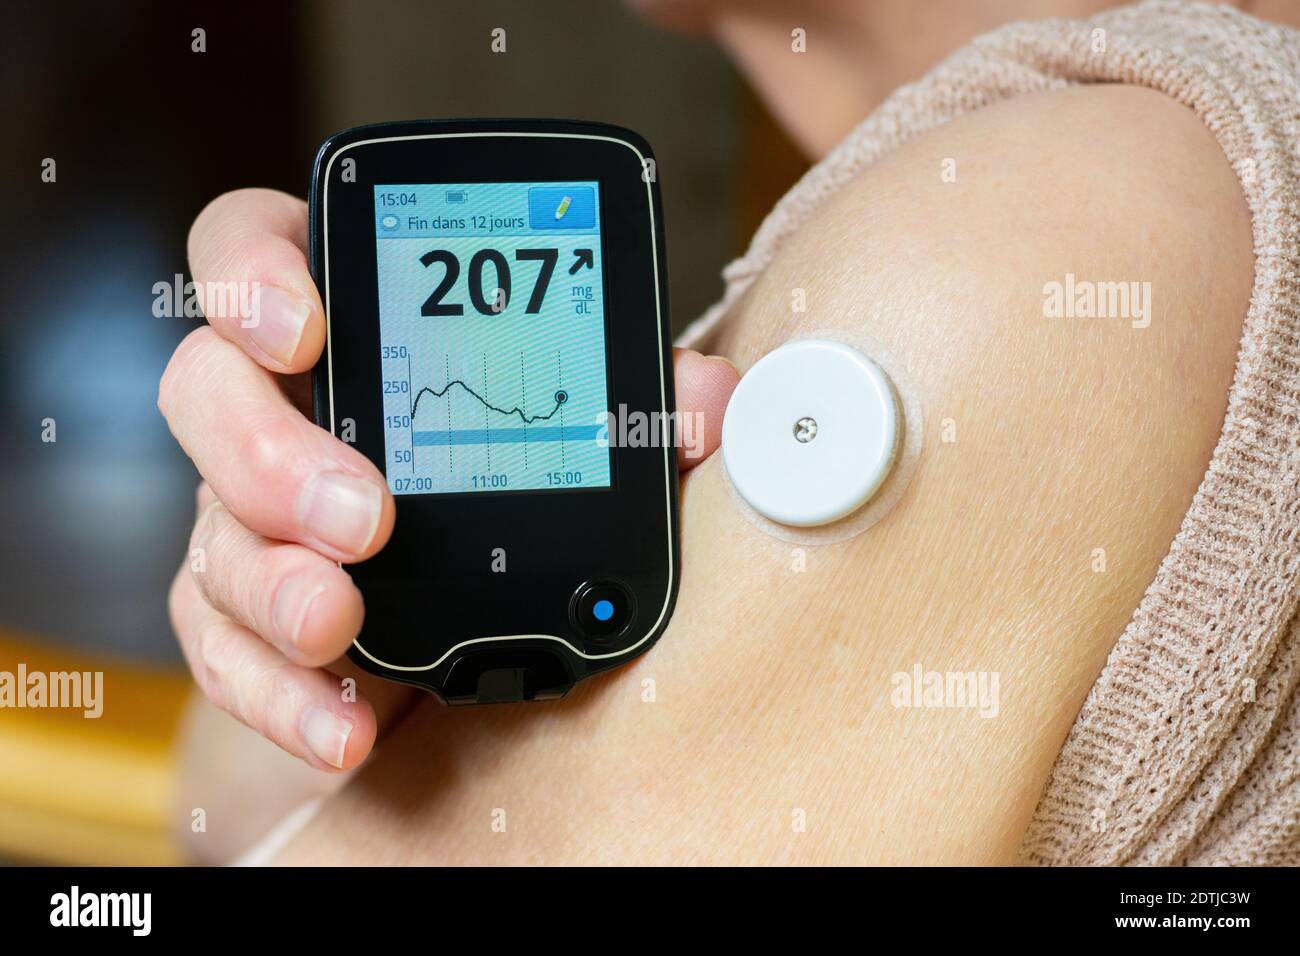 Needle-free blood glucose meter Stock Photo - Alamy